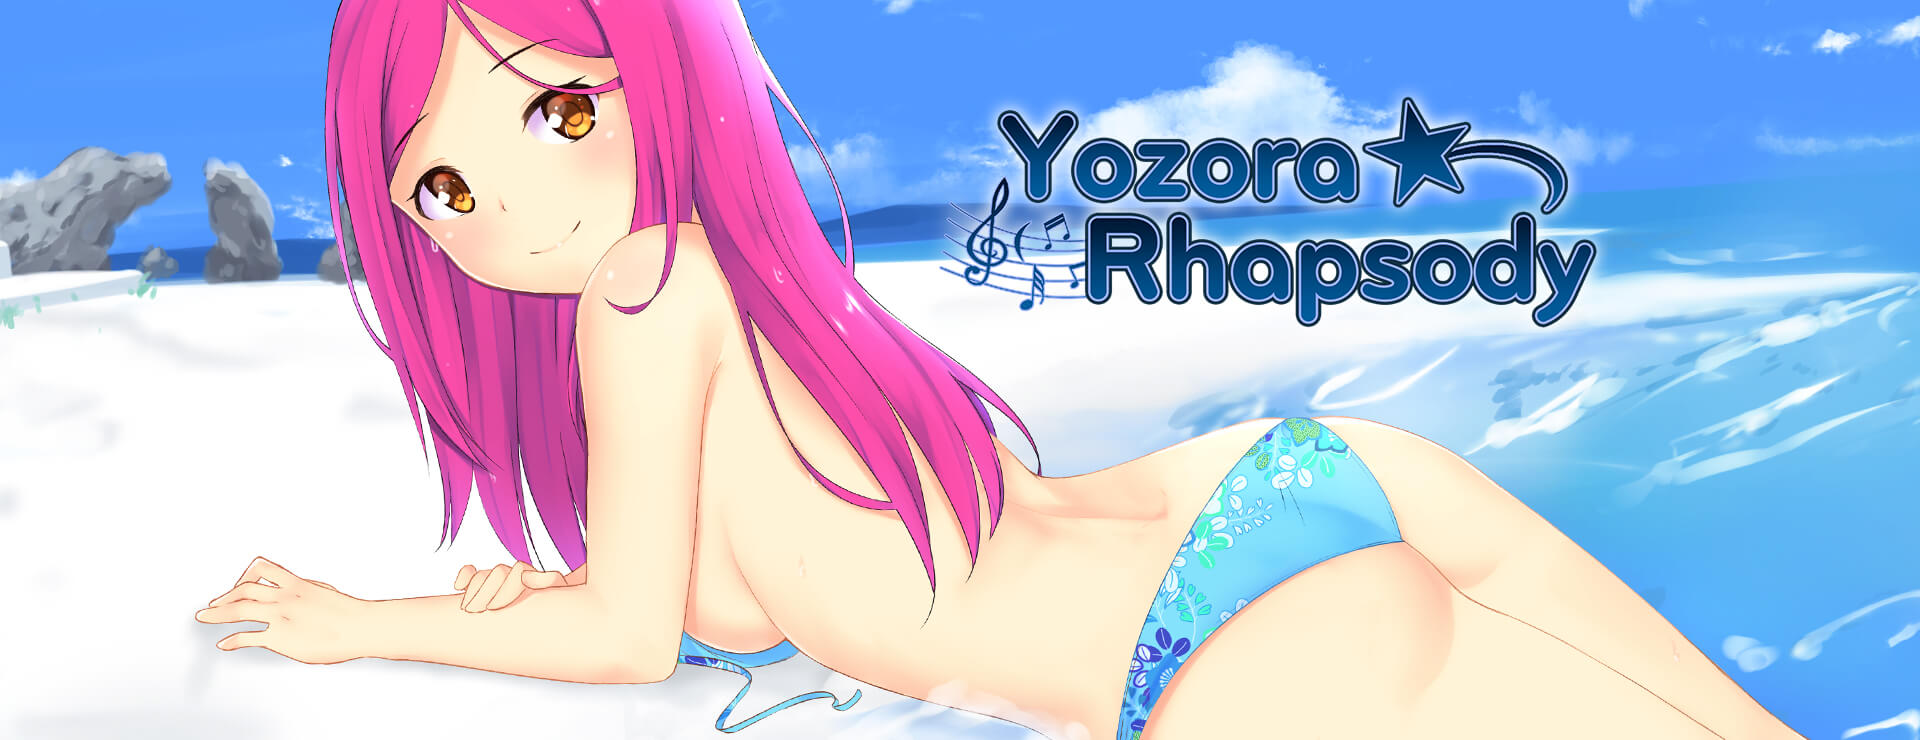 Yozora Rhapsody - Roman Visuel Jeu